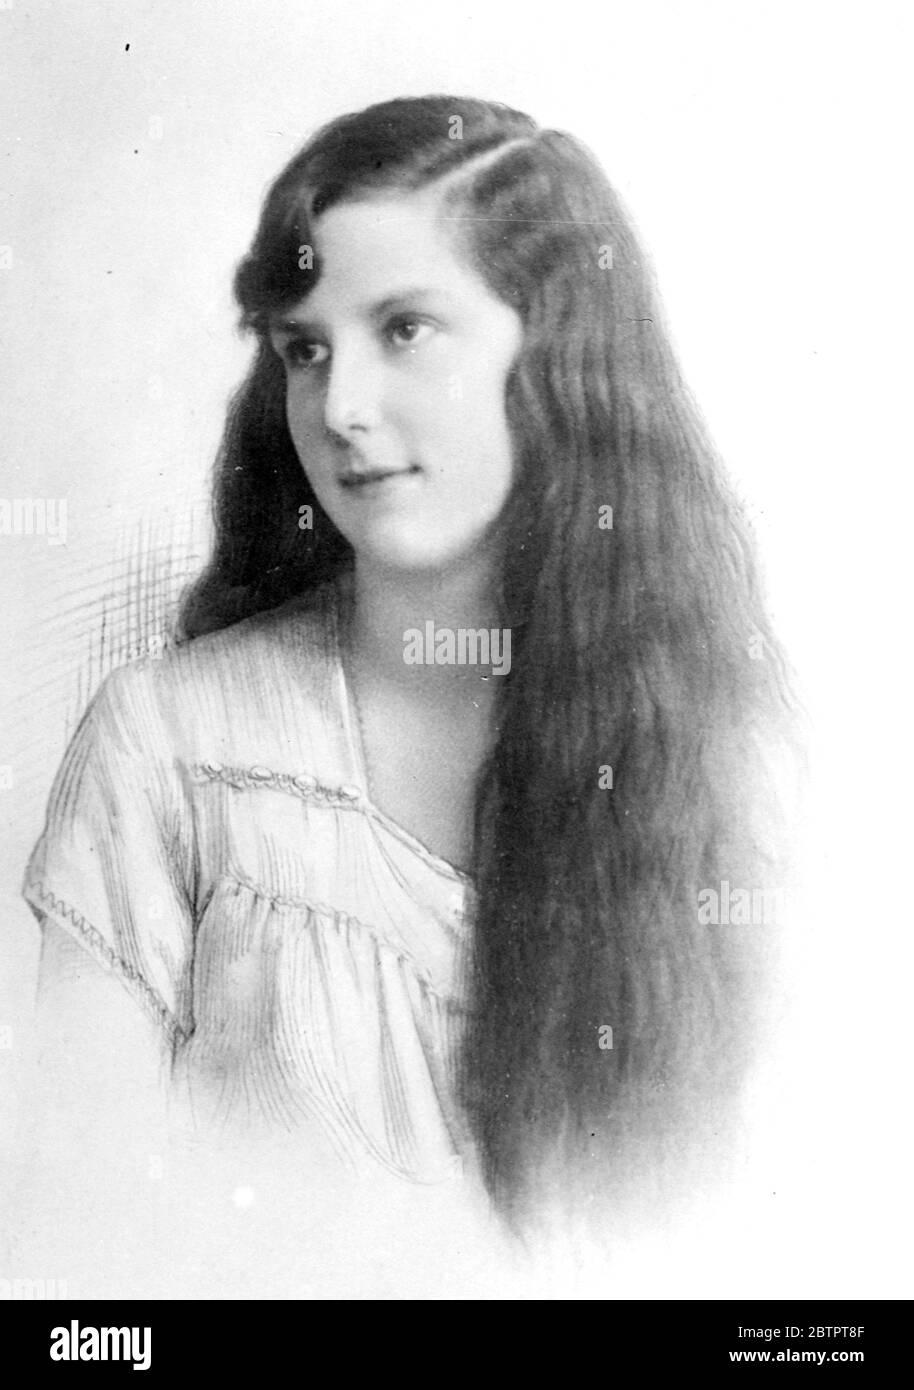 Her Promise. Queen Ivanka of Bulgaria, has, according to a Rome telegram, promised King Boris to allow her hair to grow according to Bulgarian custom. November 1930 Stock Photo